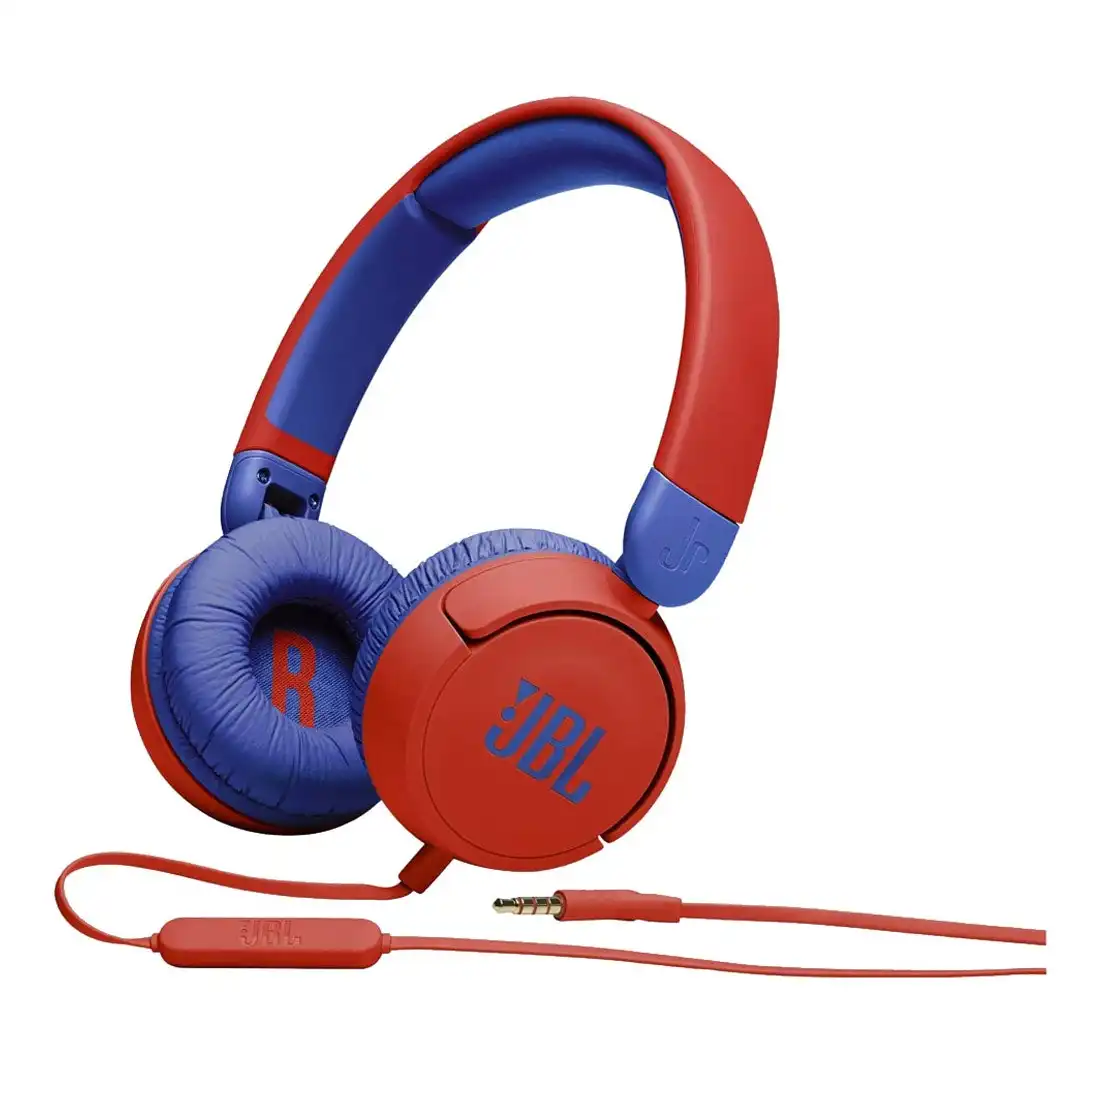 JBL JR310 Kids Wired On-Ear Headphones - Red/Blue